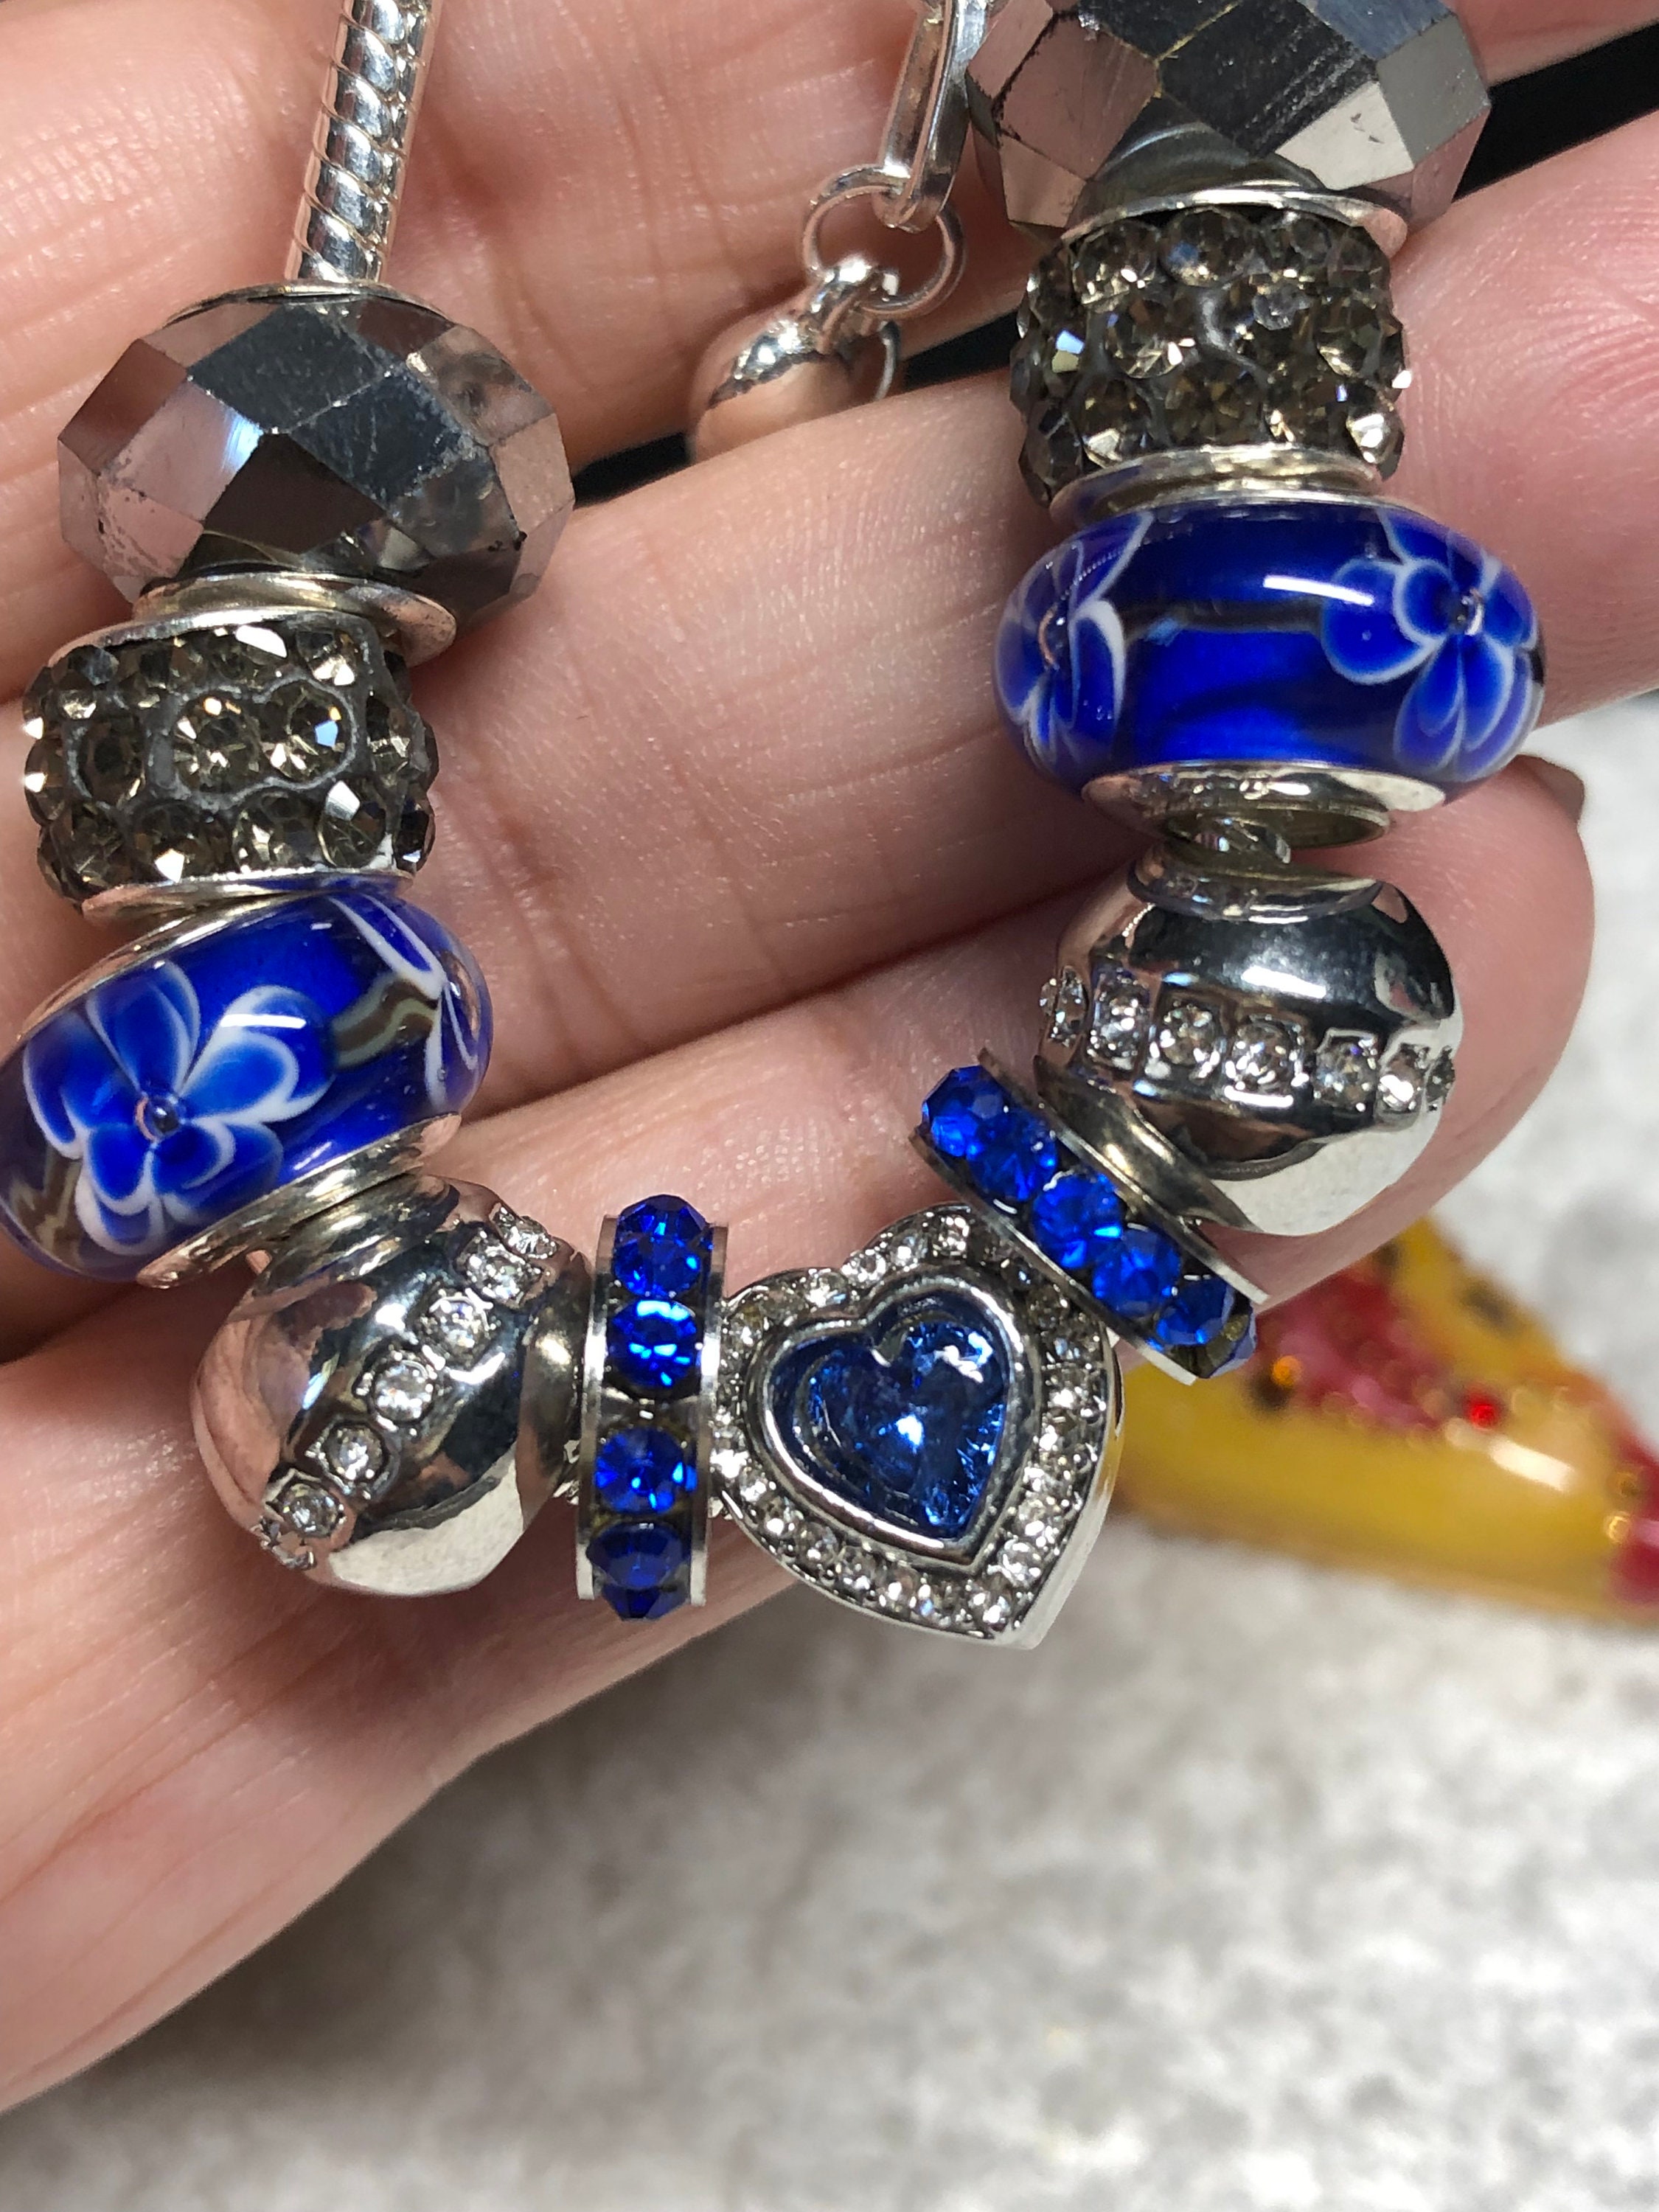 Royal Blue Glass Bead Charm Bracelet Quality Murano Glass Beads